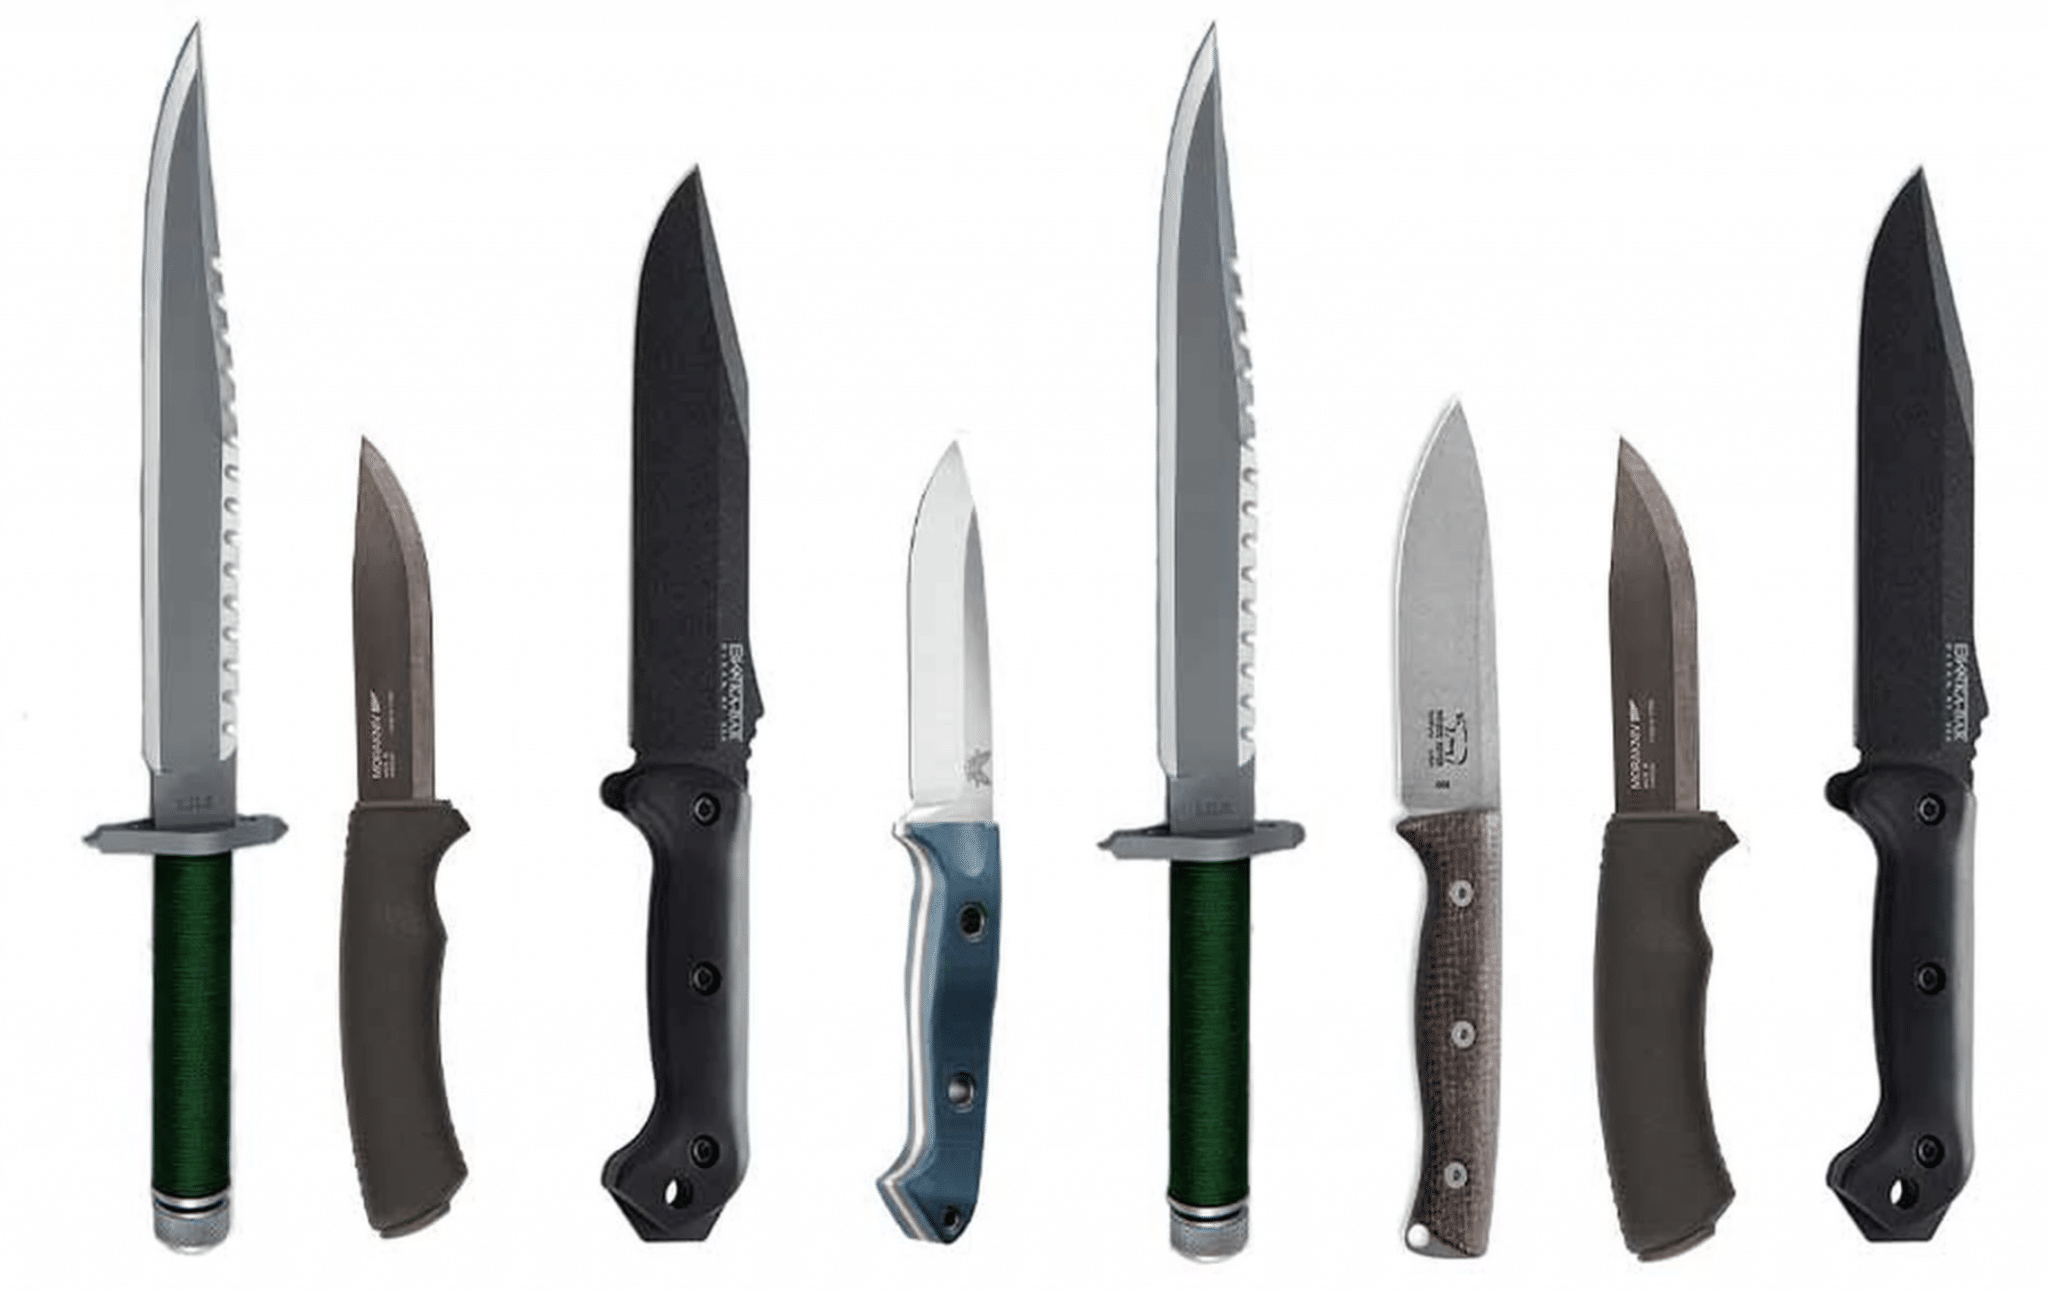 Choosing The Best Steel For A Bushcraft Knife